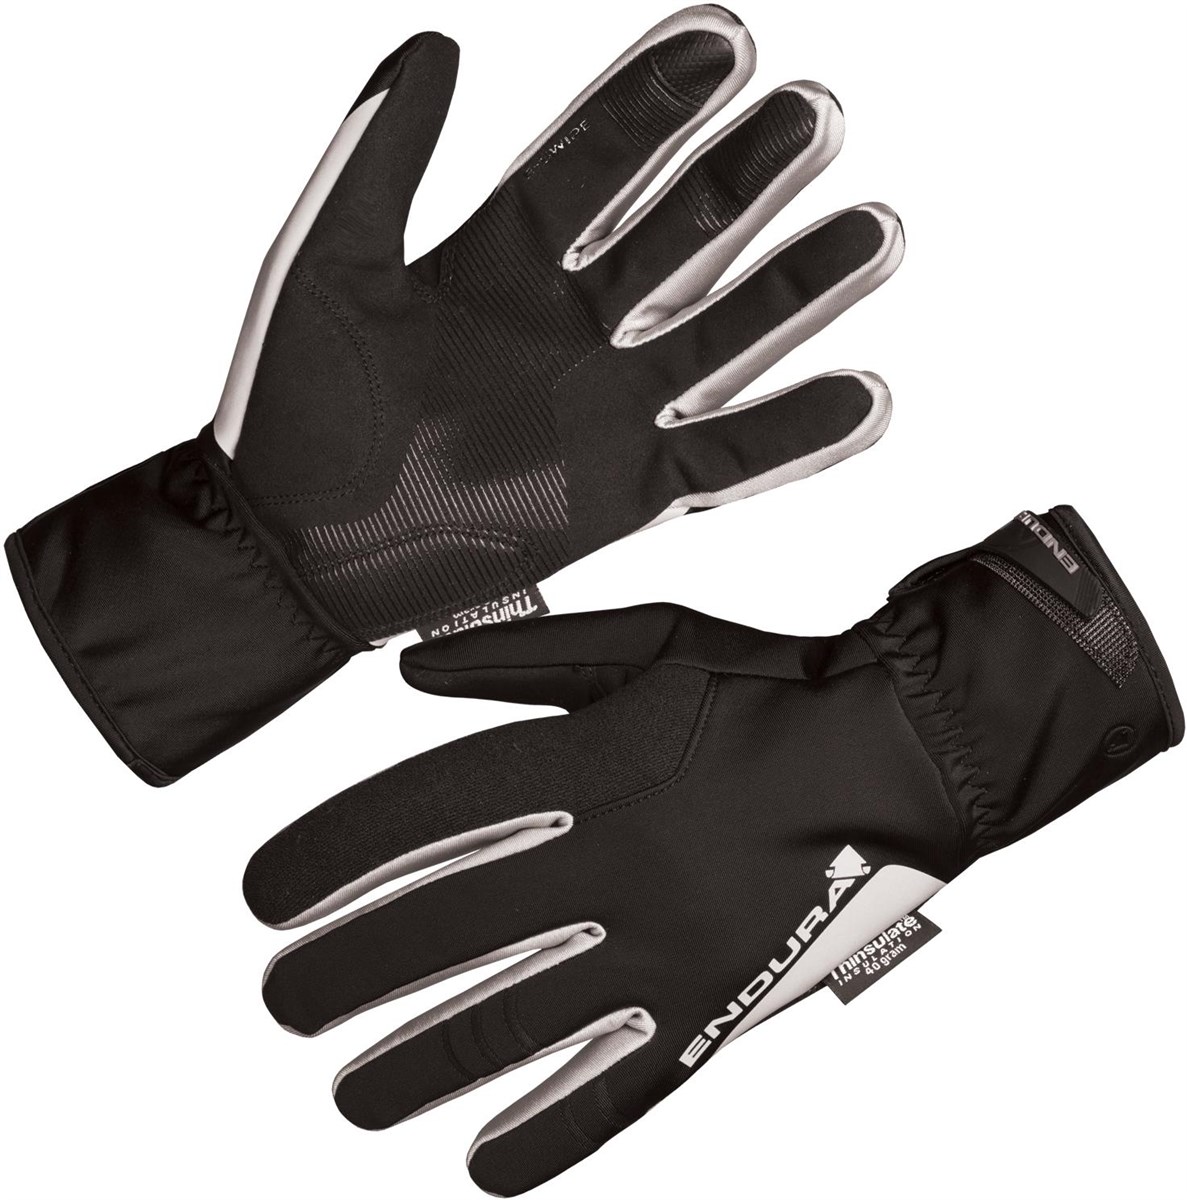 Endura Deluge II Long Finger Cycling Gloves